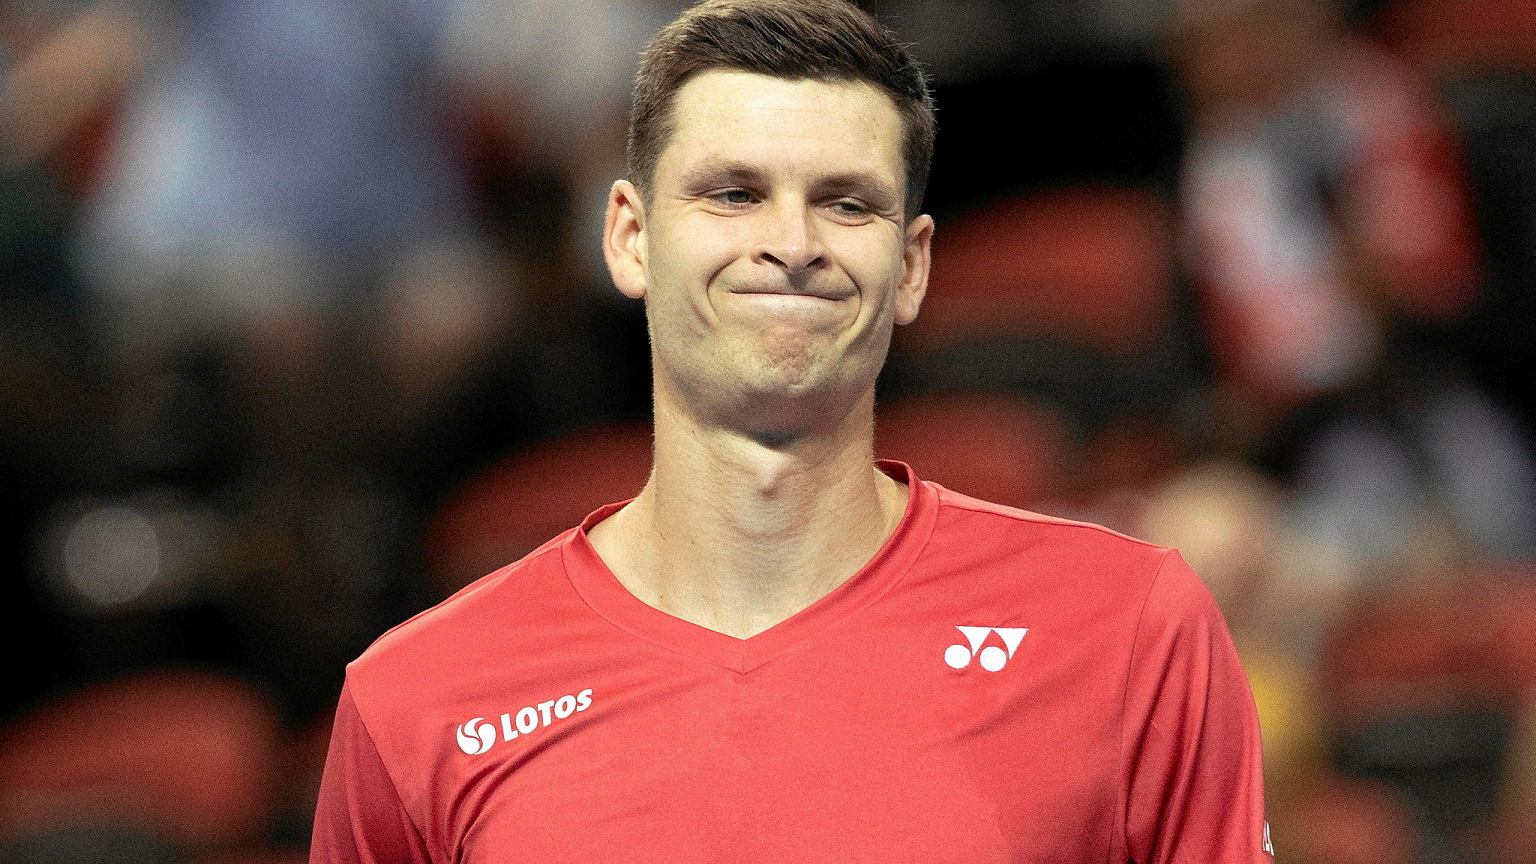 Novak Djokovic during the game against the Hubert Hercox in Paris